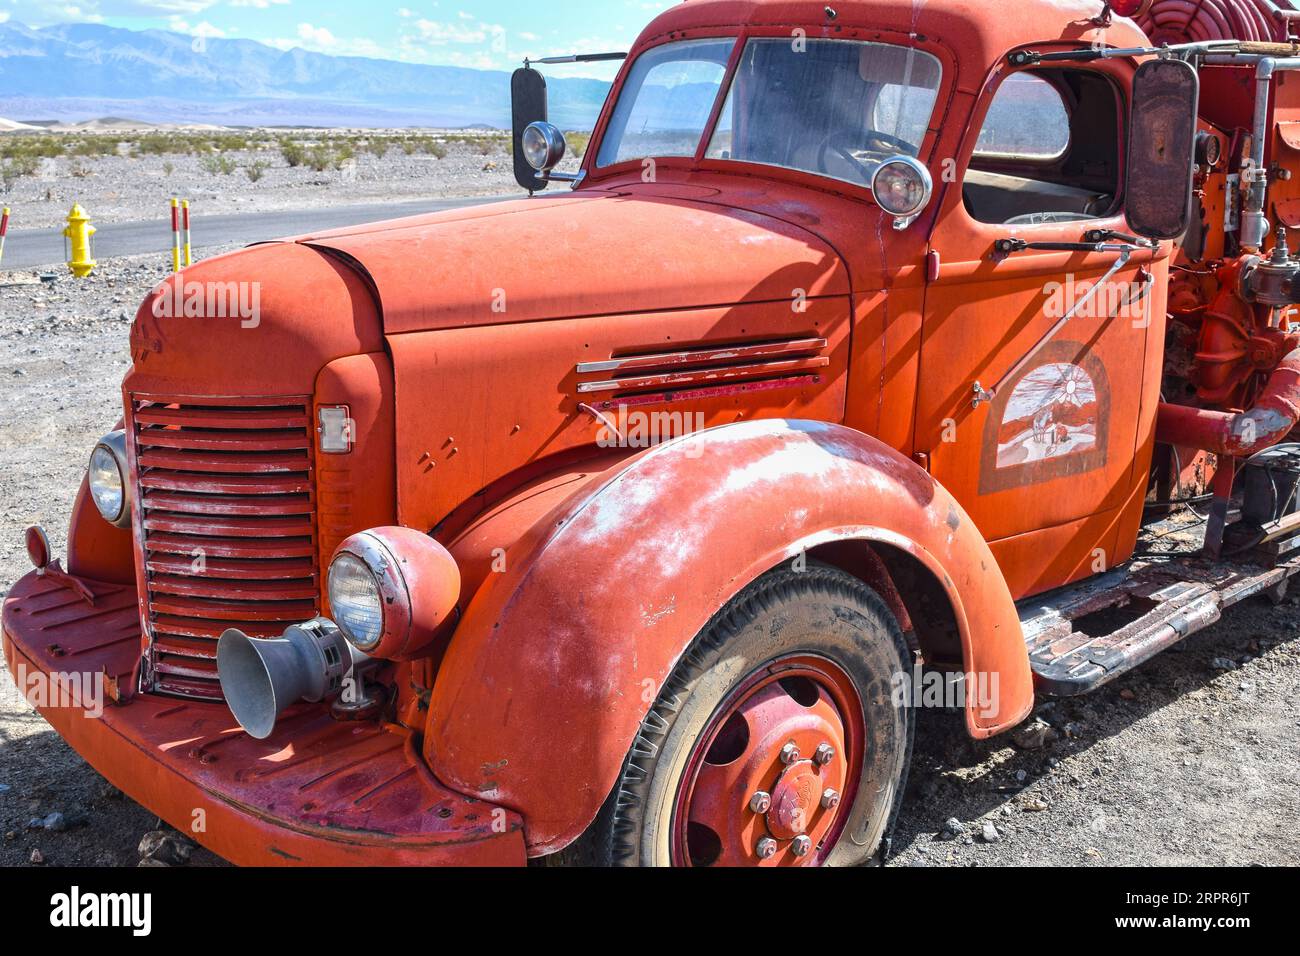 STOVEPIPE WELLS, CA, USA - 17. MÄRZ 2016: Oldtimer-Feuerwehrfahrzeug in Stovepipe Wells, Death Valley National Park, Kalifornien. Der National Pa Stockfoto